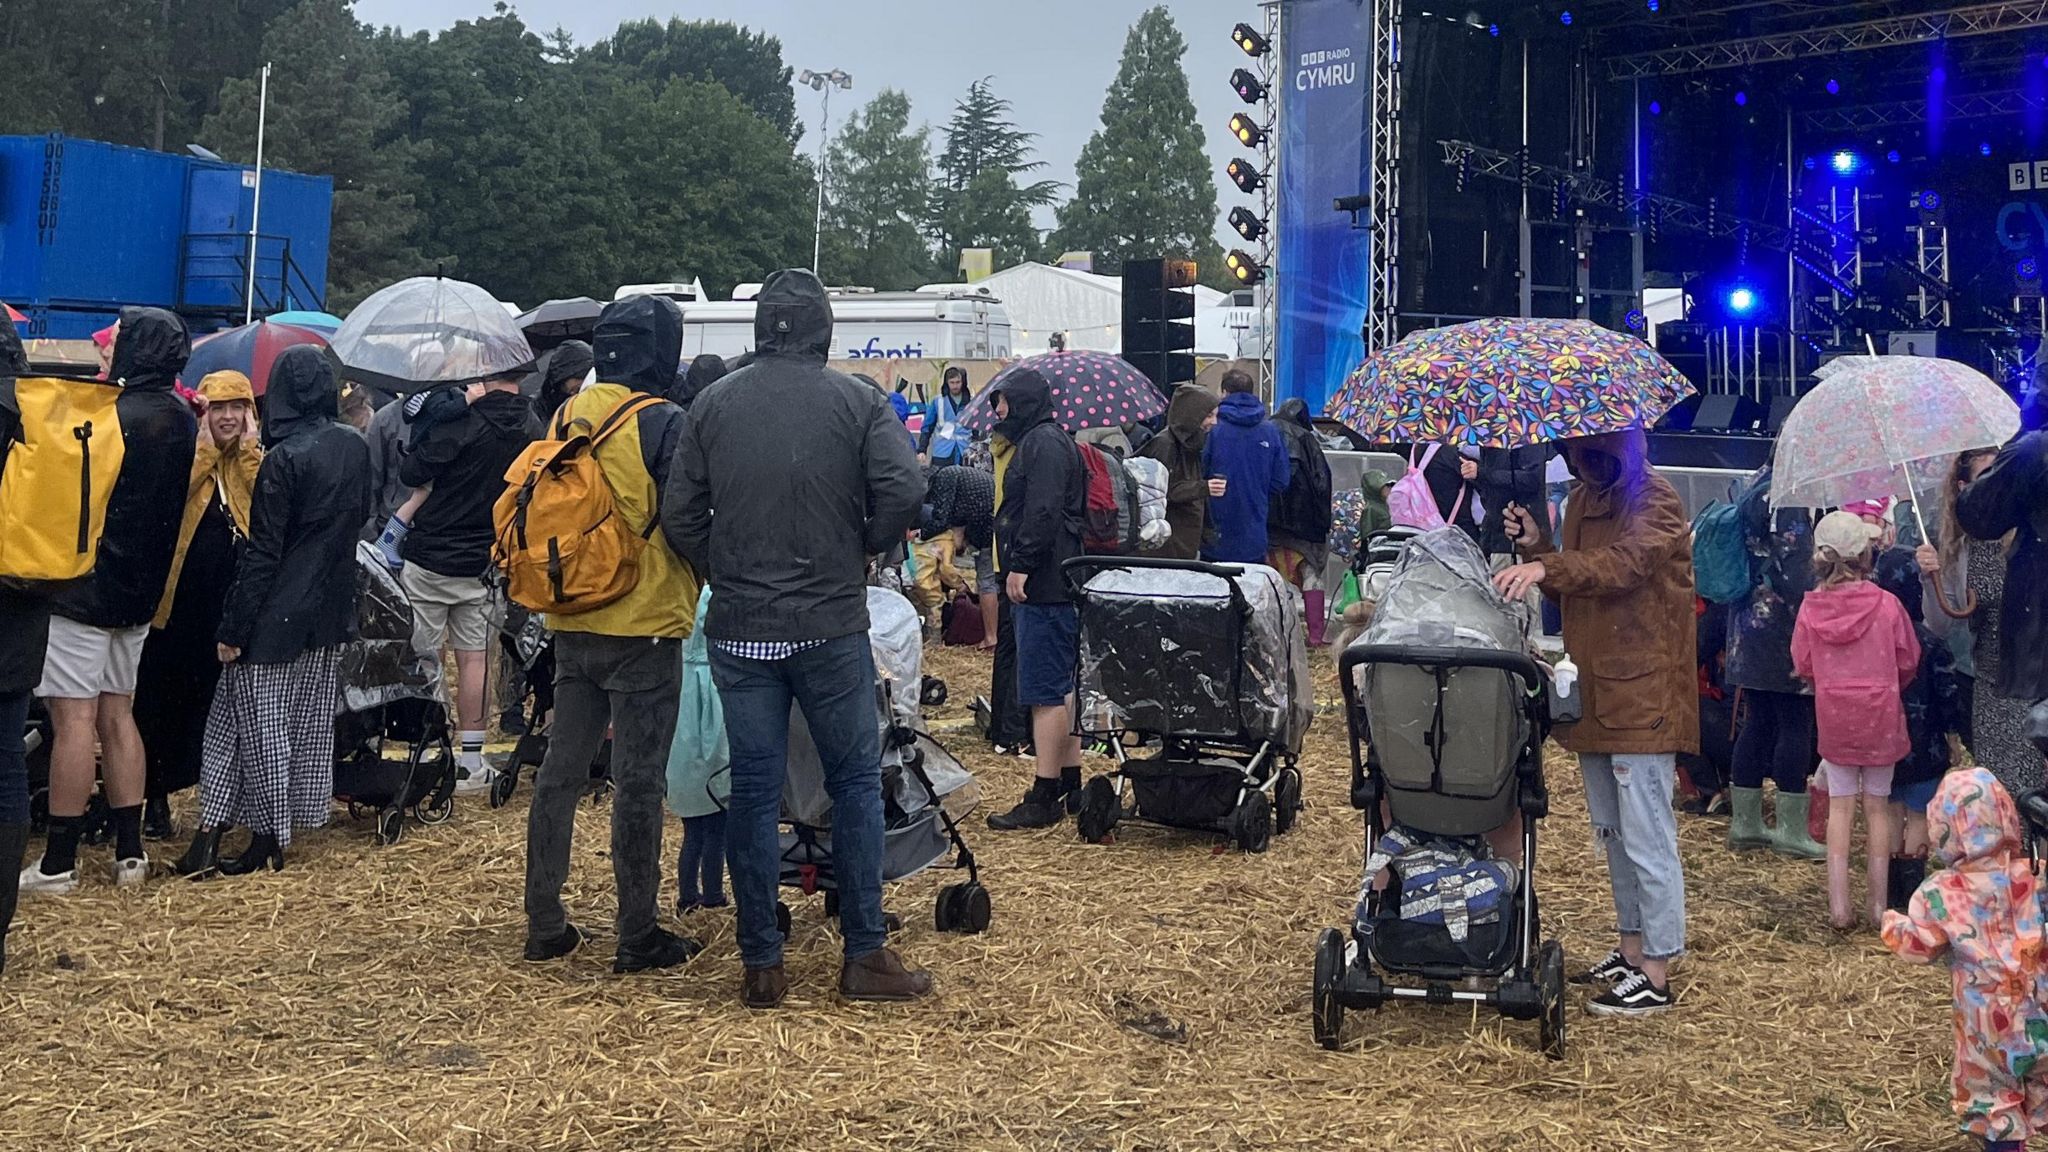 Crowd of spectators in raincoats